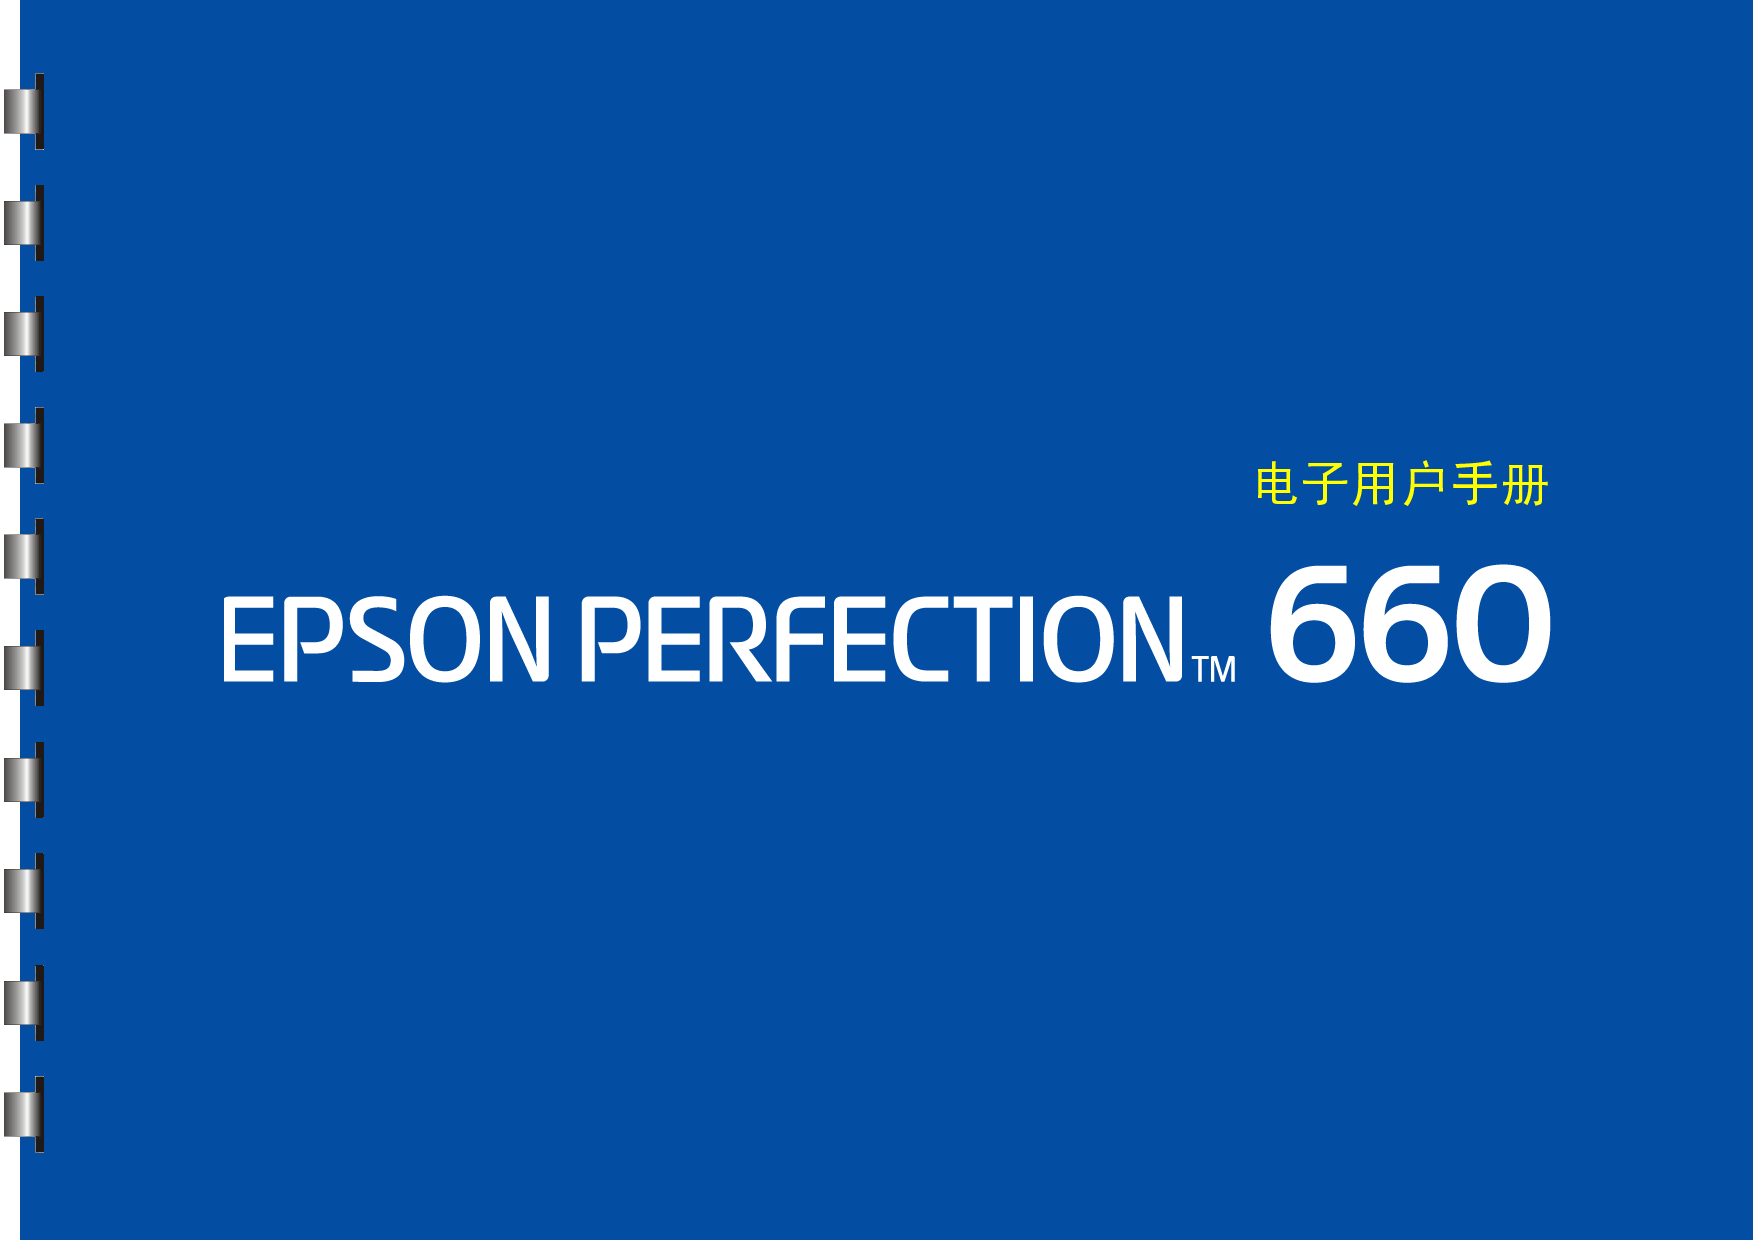 爱普生 Epson Perfection 660 用户指南 封面